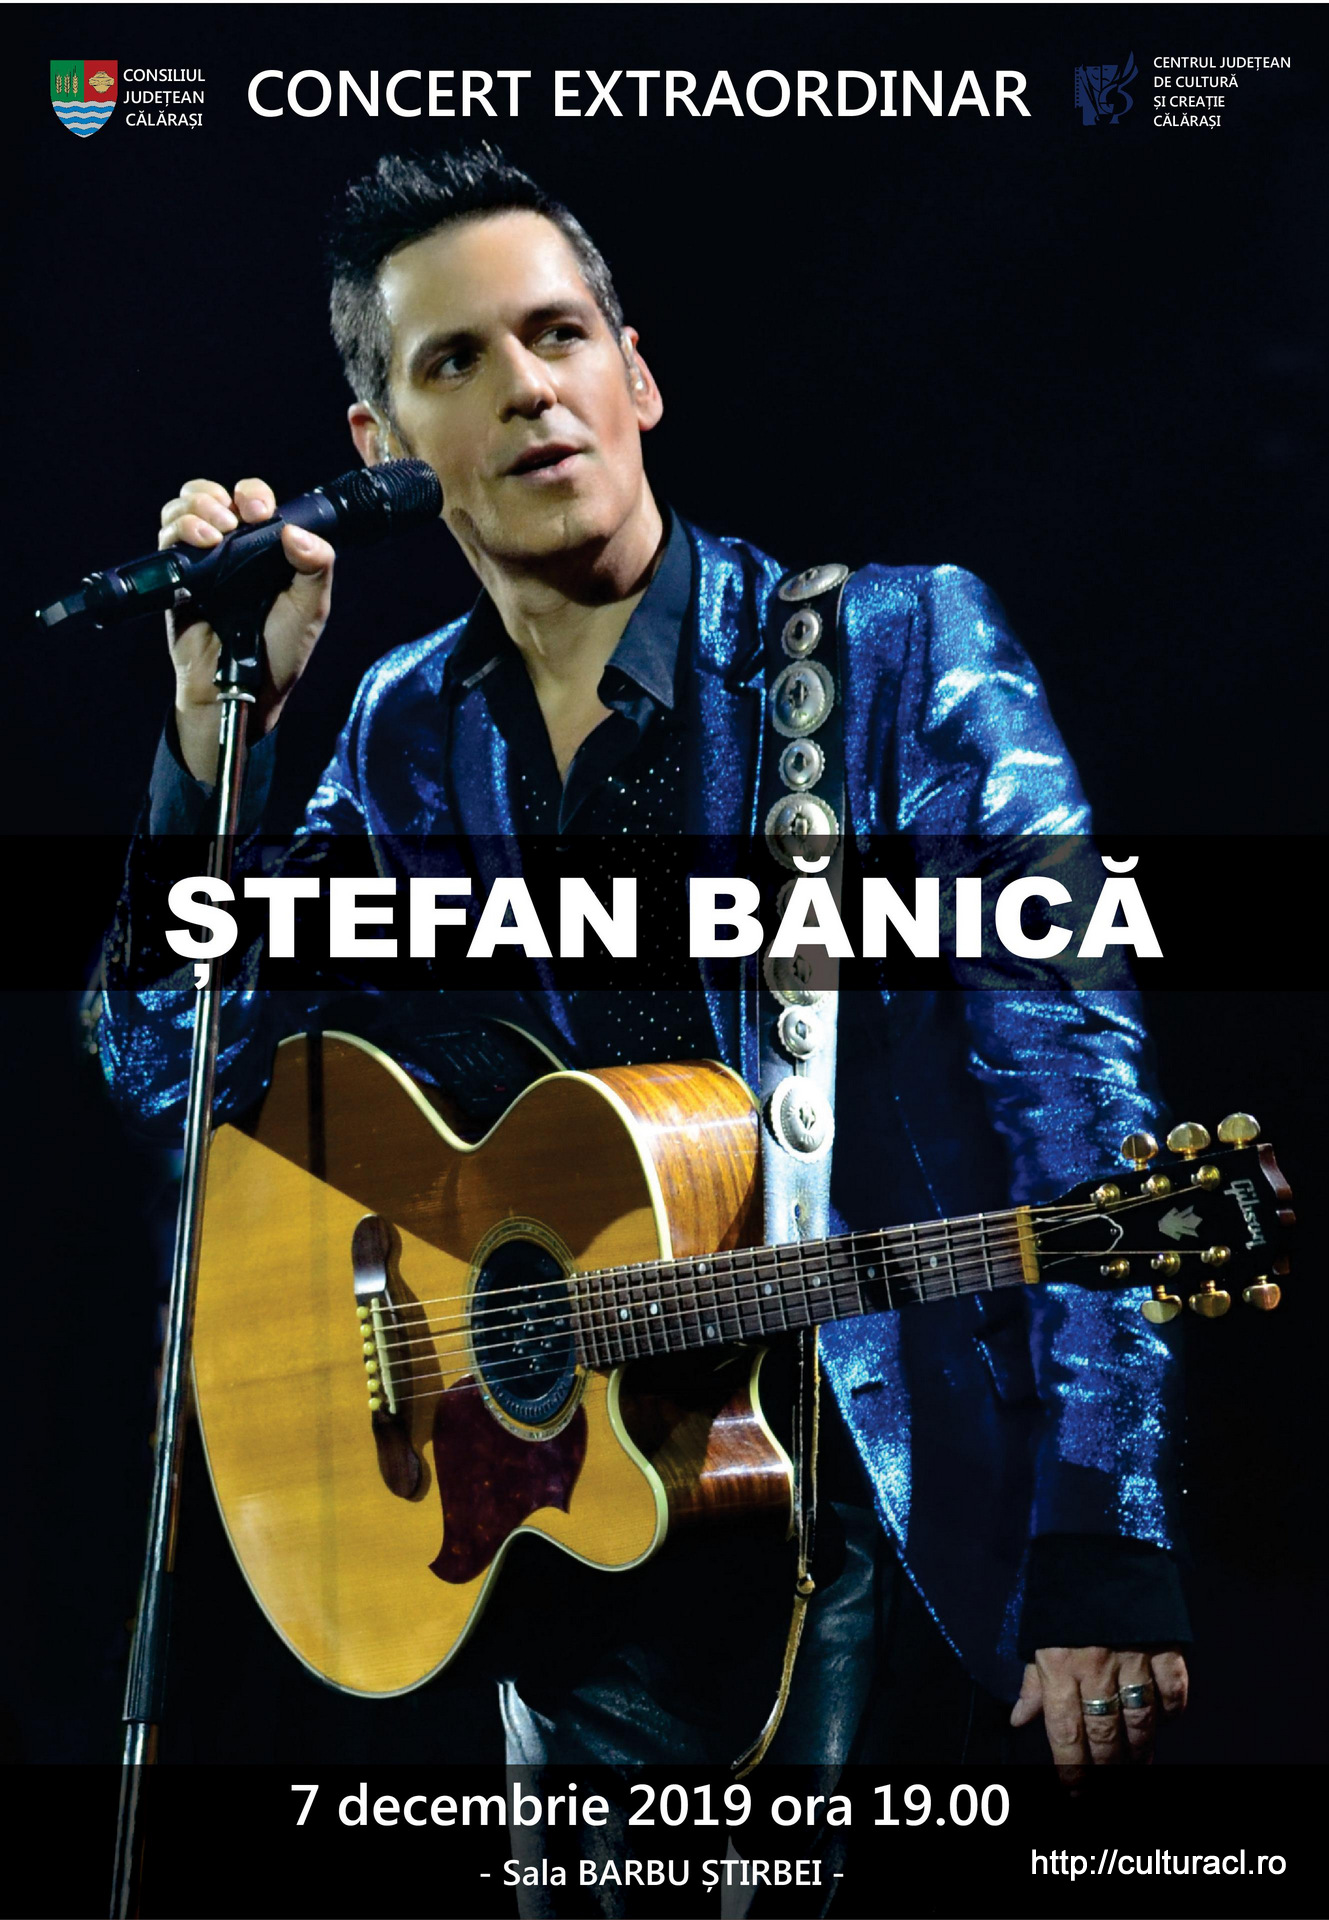 Concert extraordinar - Stefan Banica